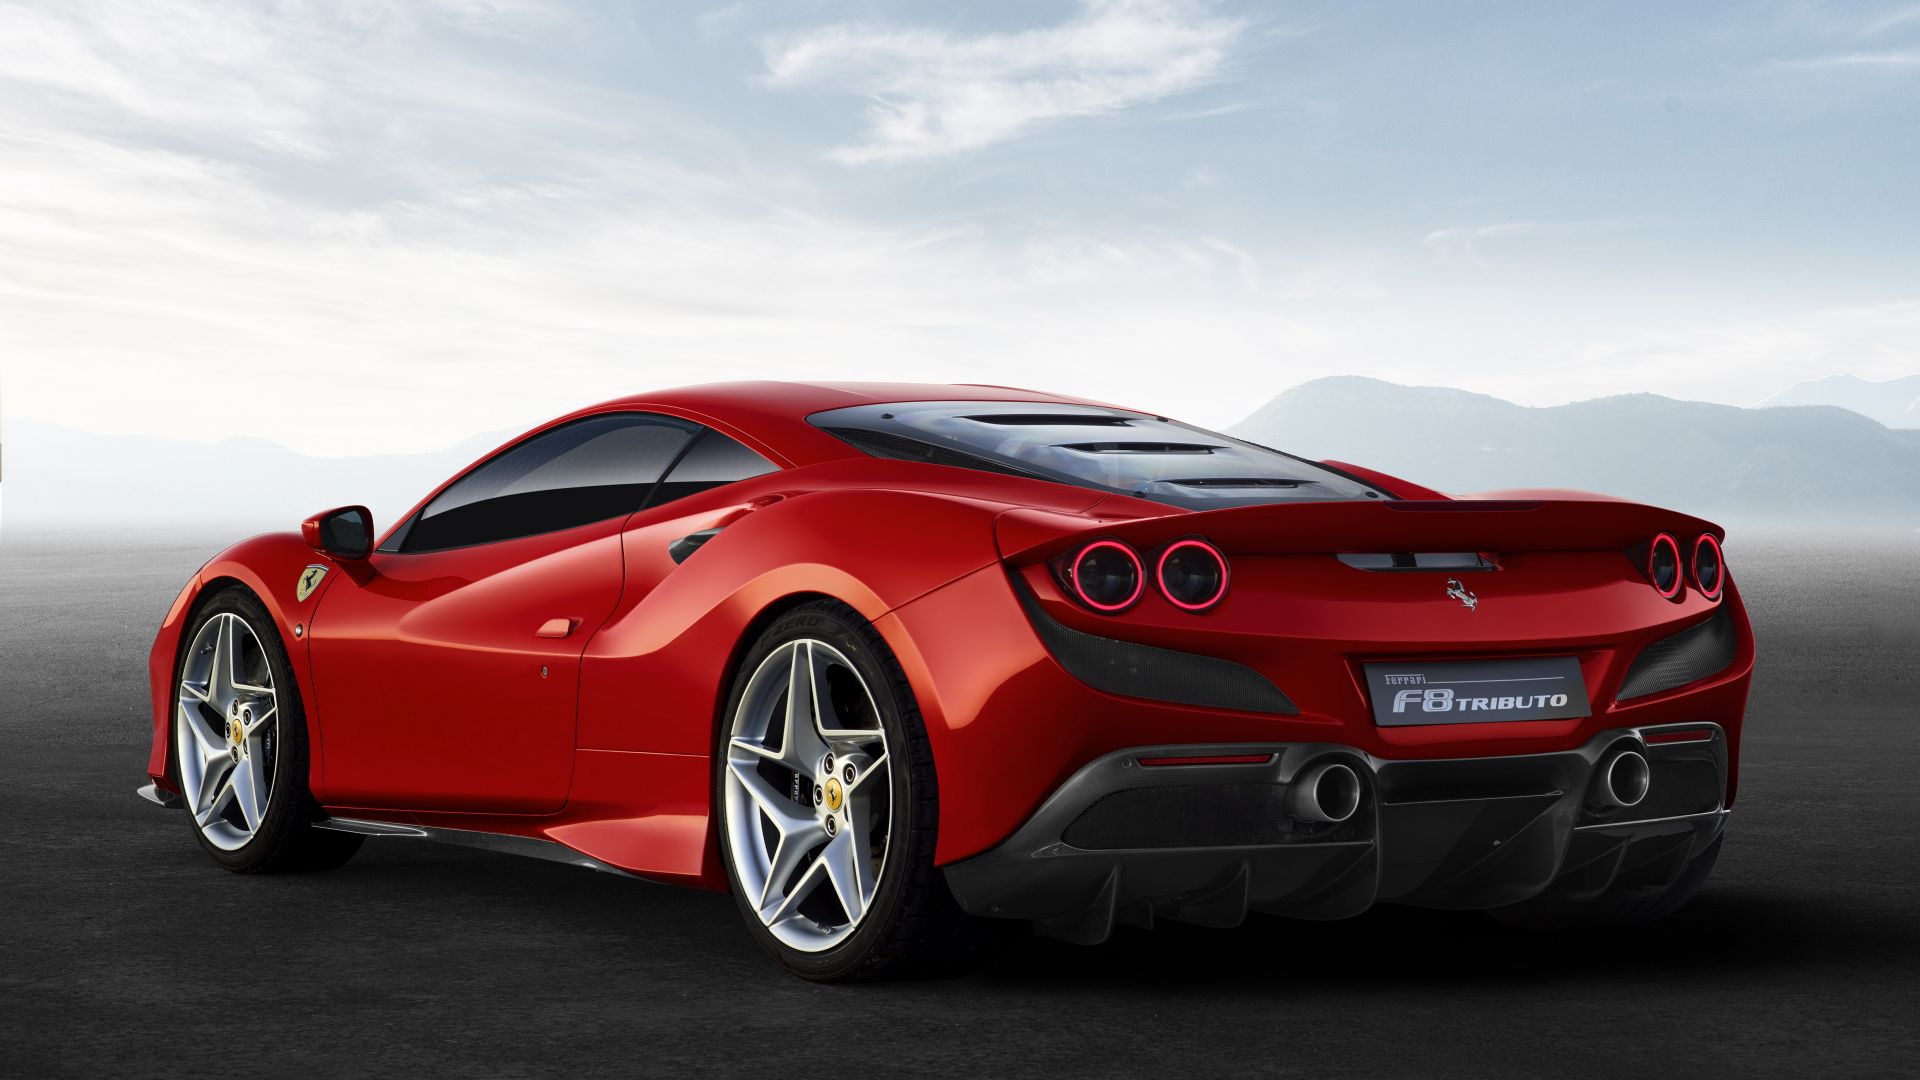 Ferrari F8 Tributo, 2019 Cars, supercar, Geneva Motor Show 2019, 4K (horizontal)